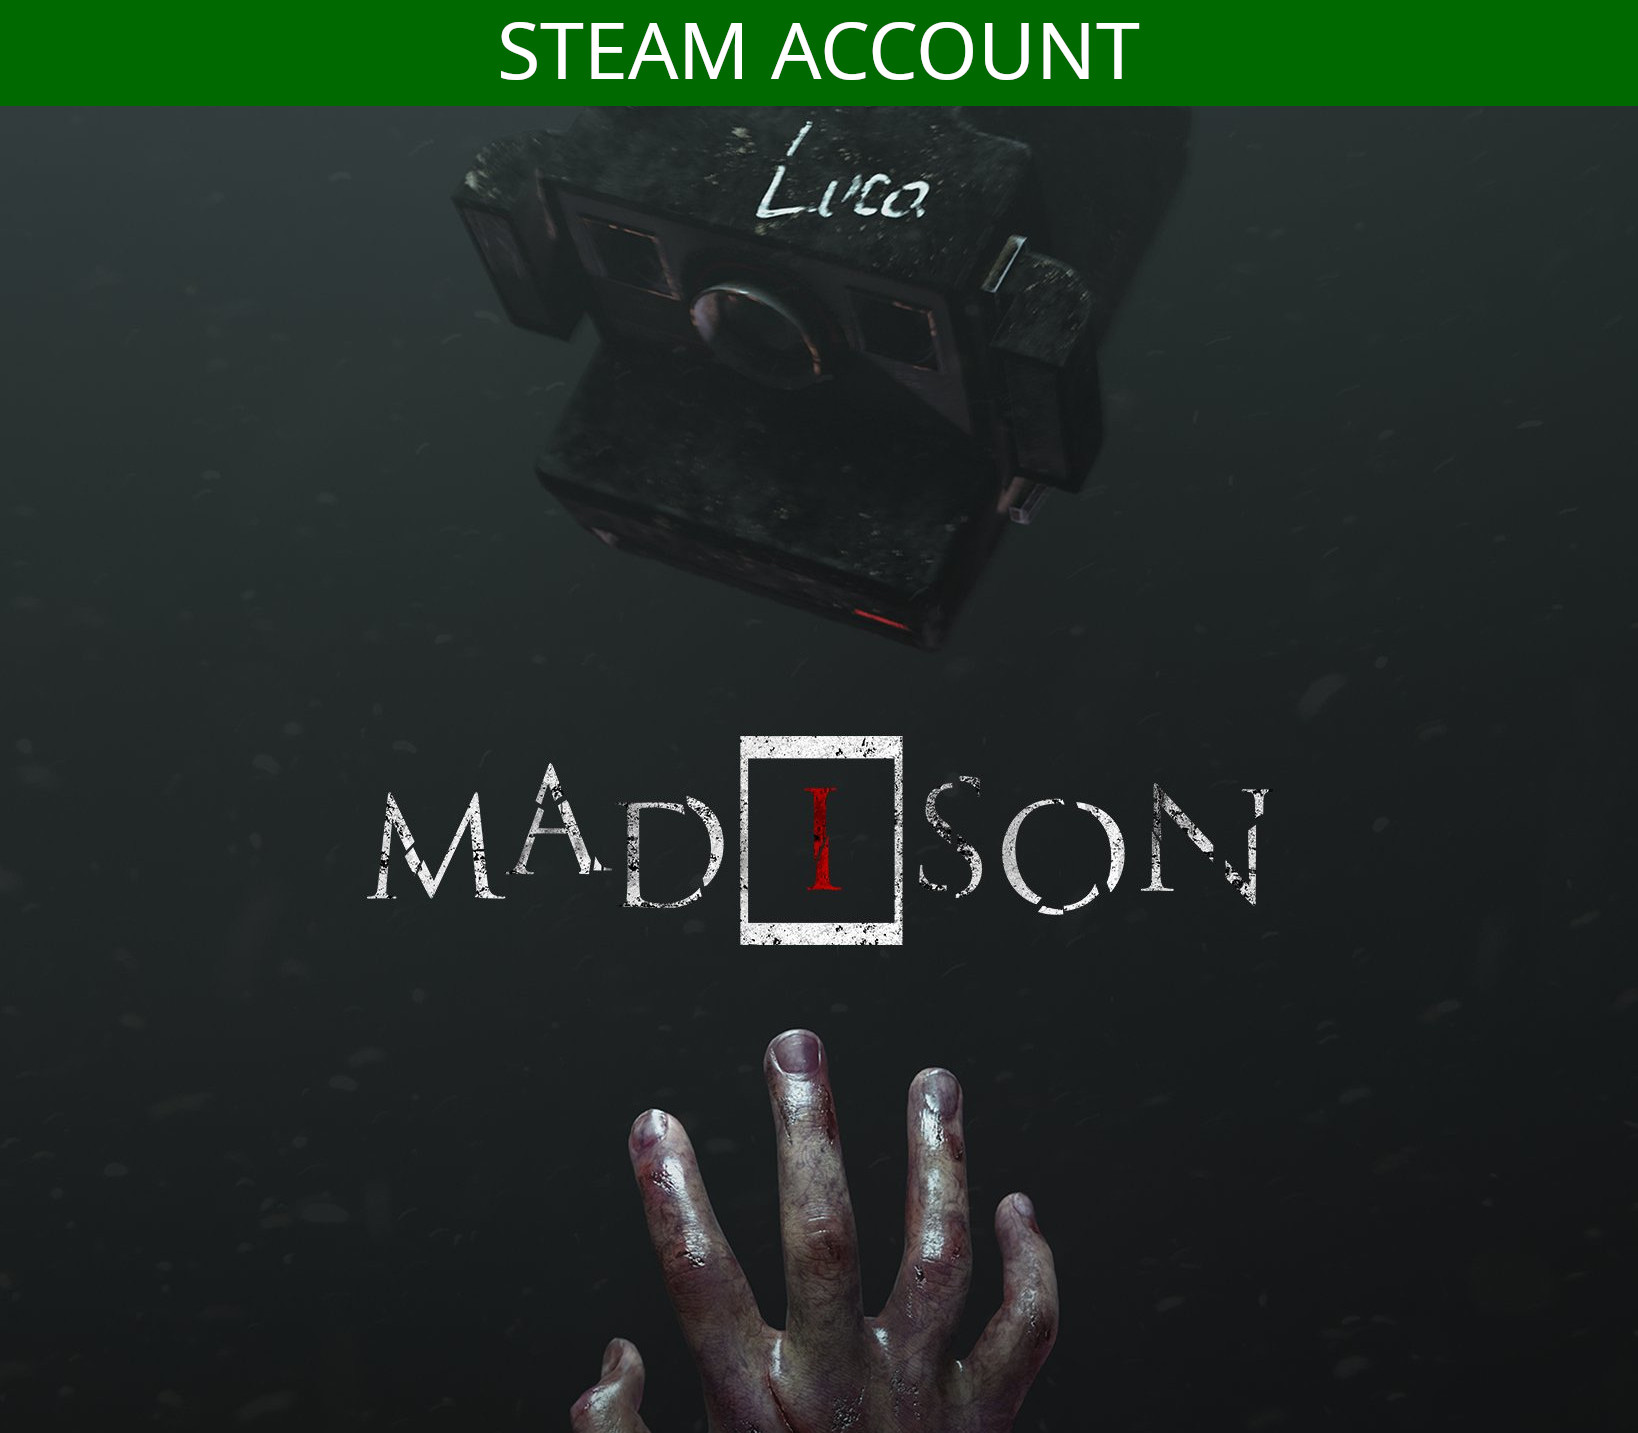 MADiSON on Steam